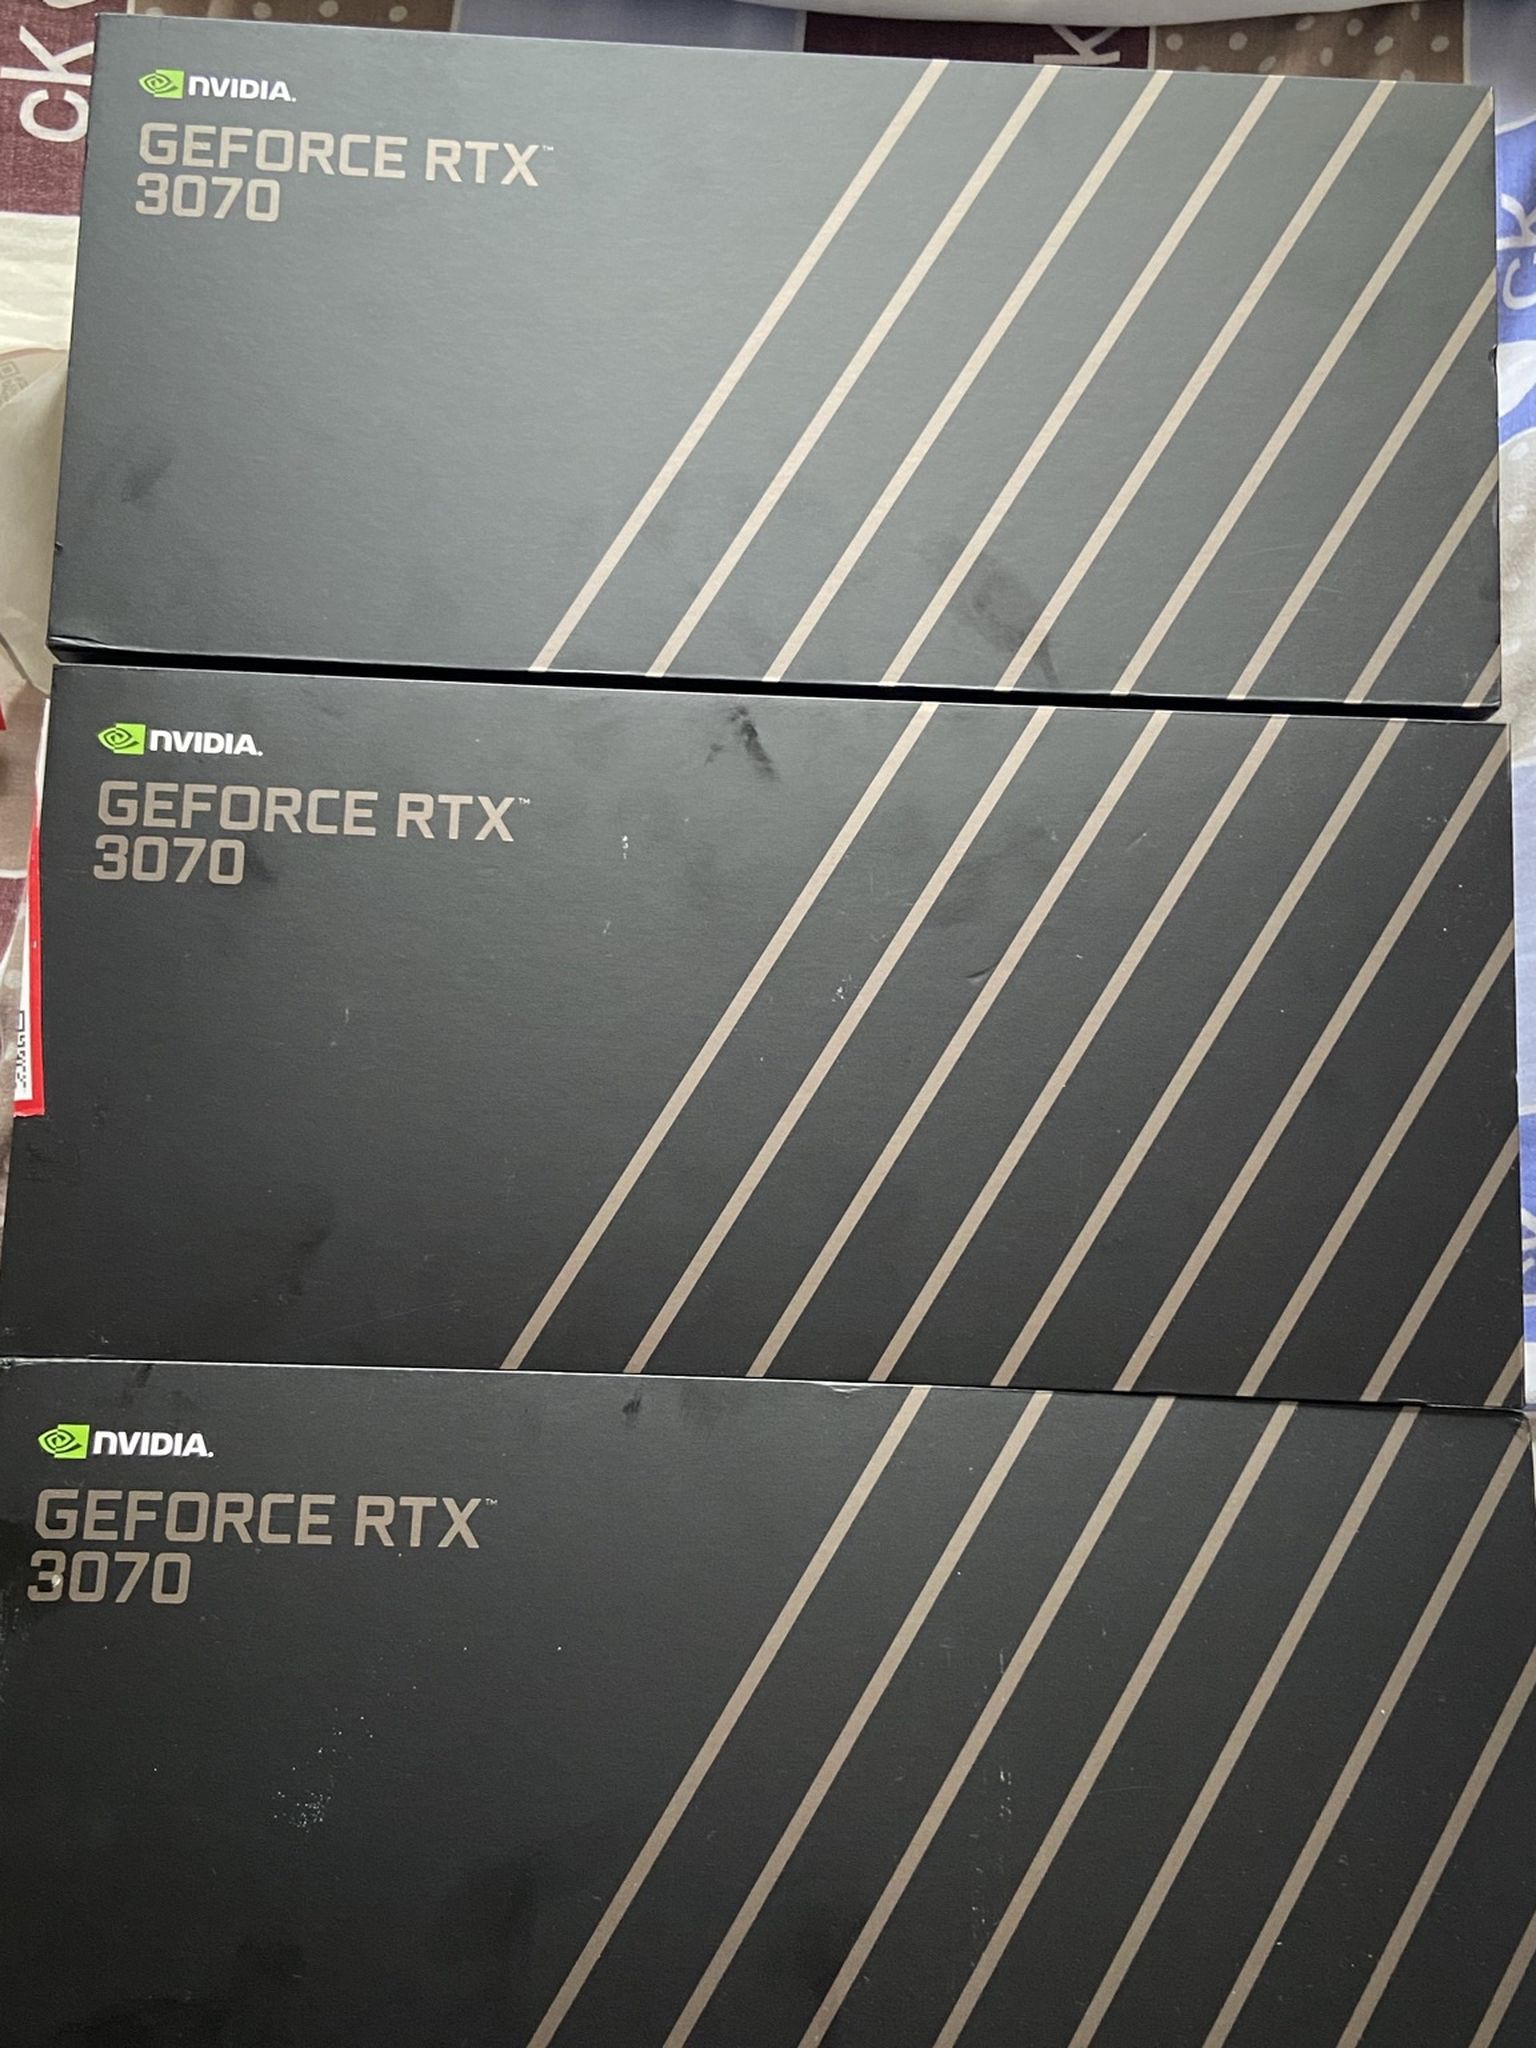 NVIDIA GTX 3070 And 3080 Brand New Sealed